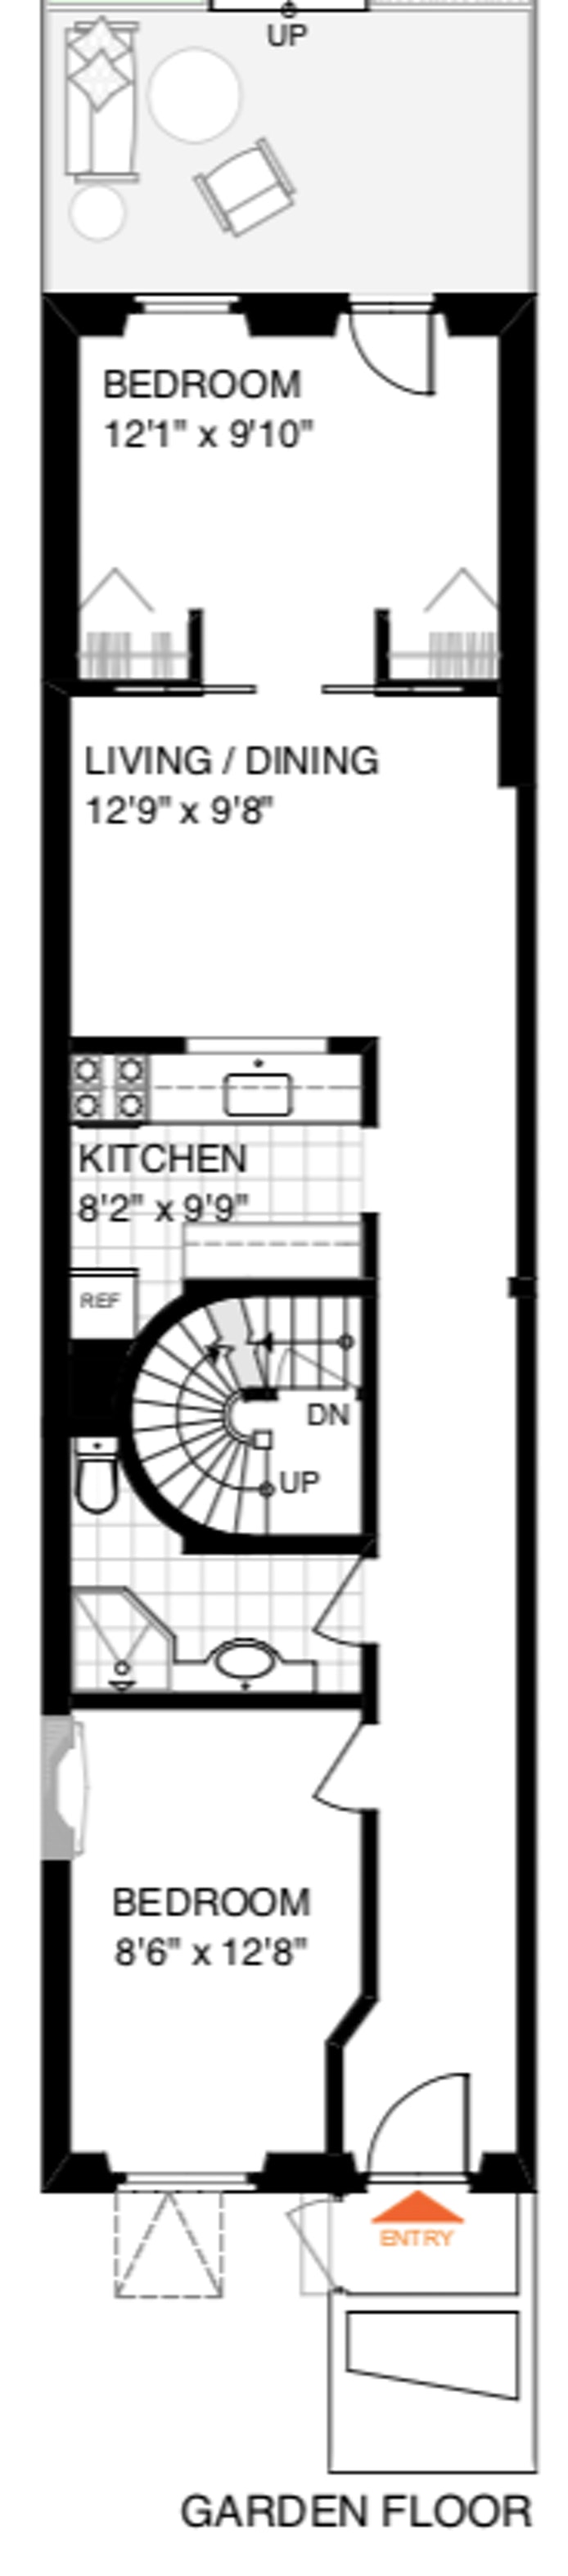 Floorplan for 295 Pacific Street, 1